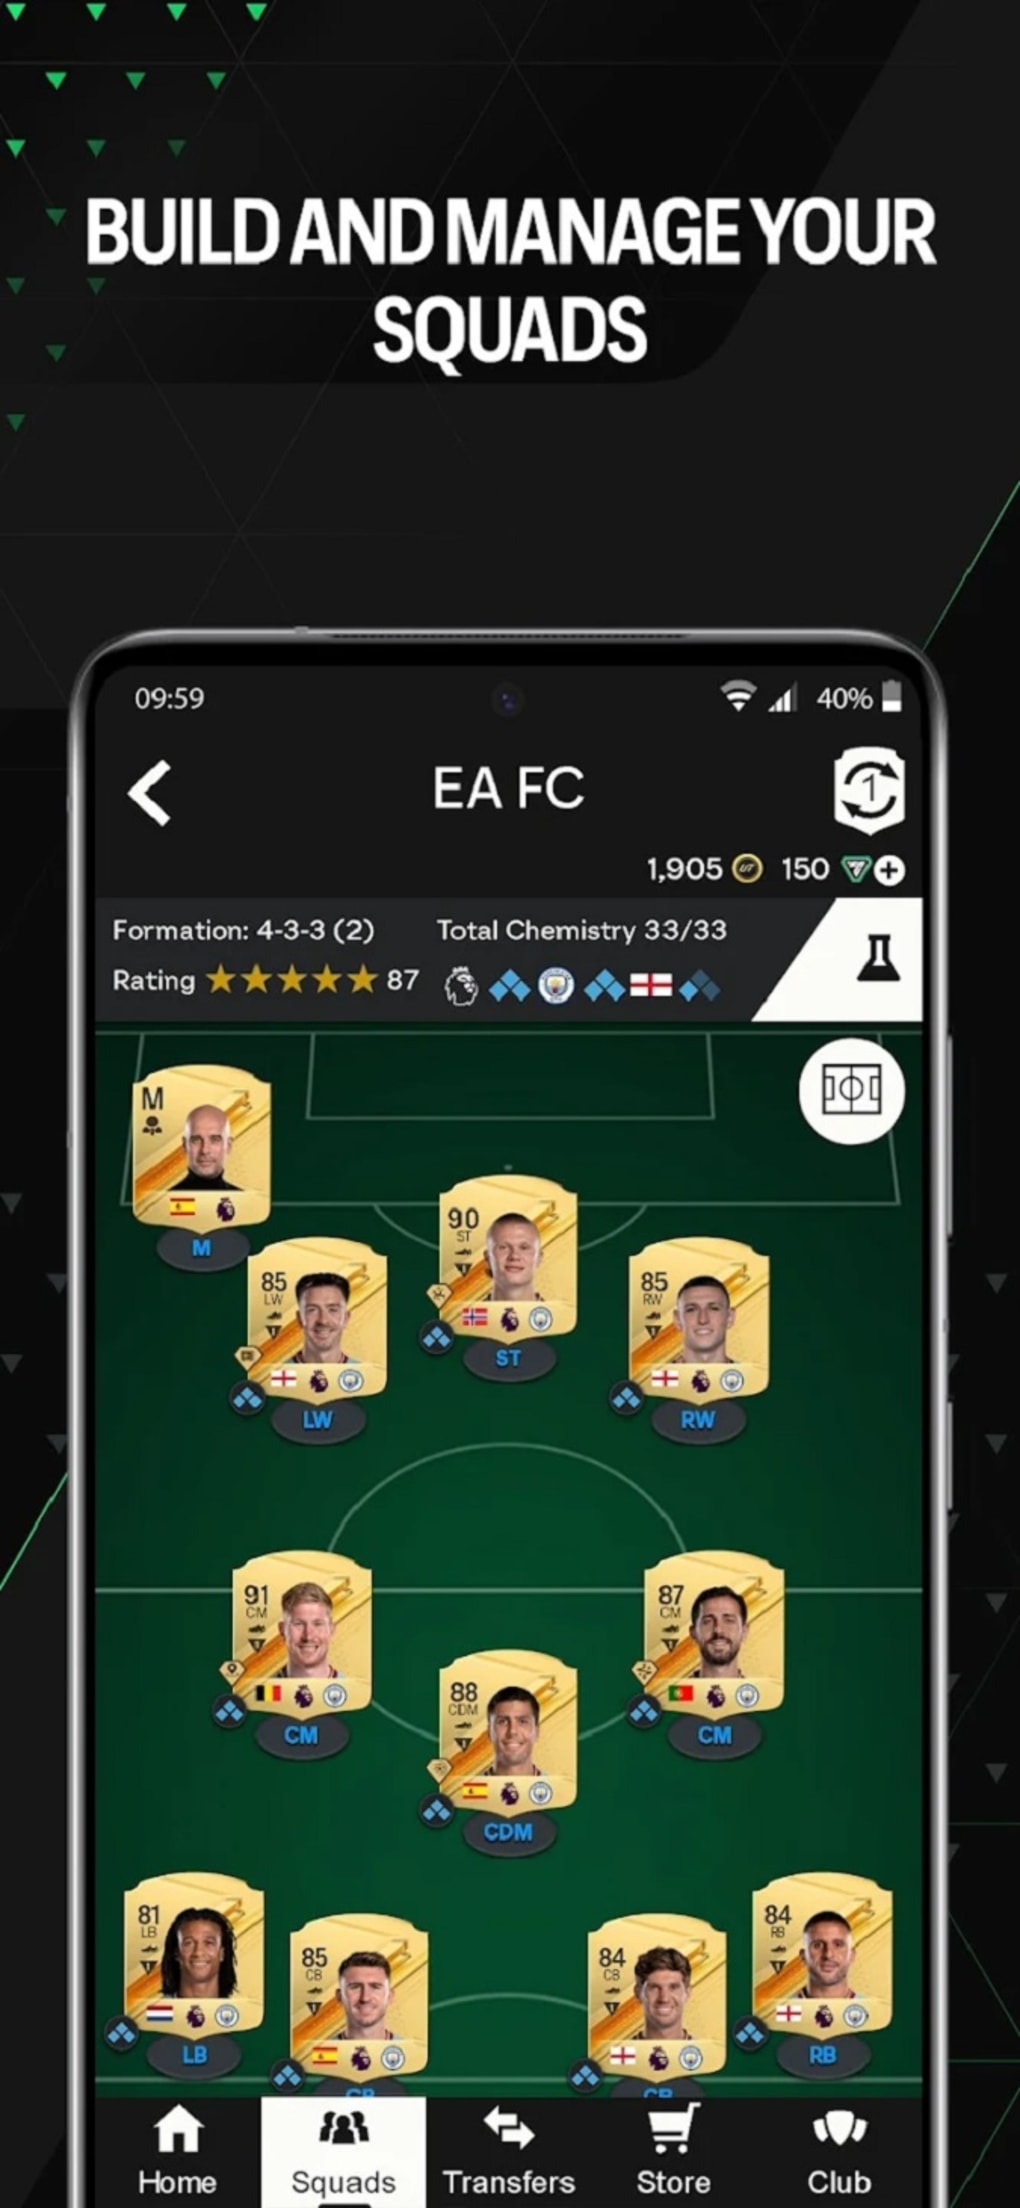 EA Sports FIFA 24 Companion for iPhone - Download